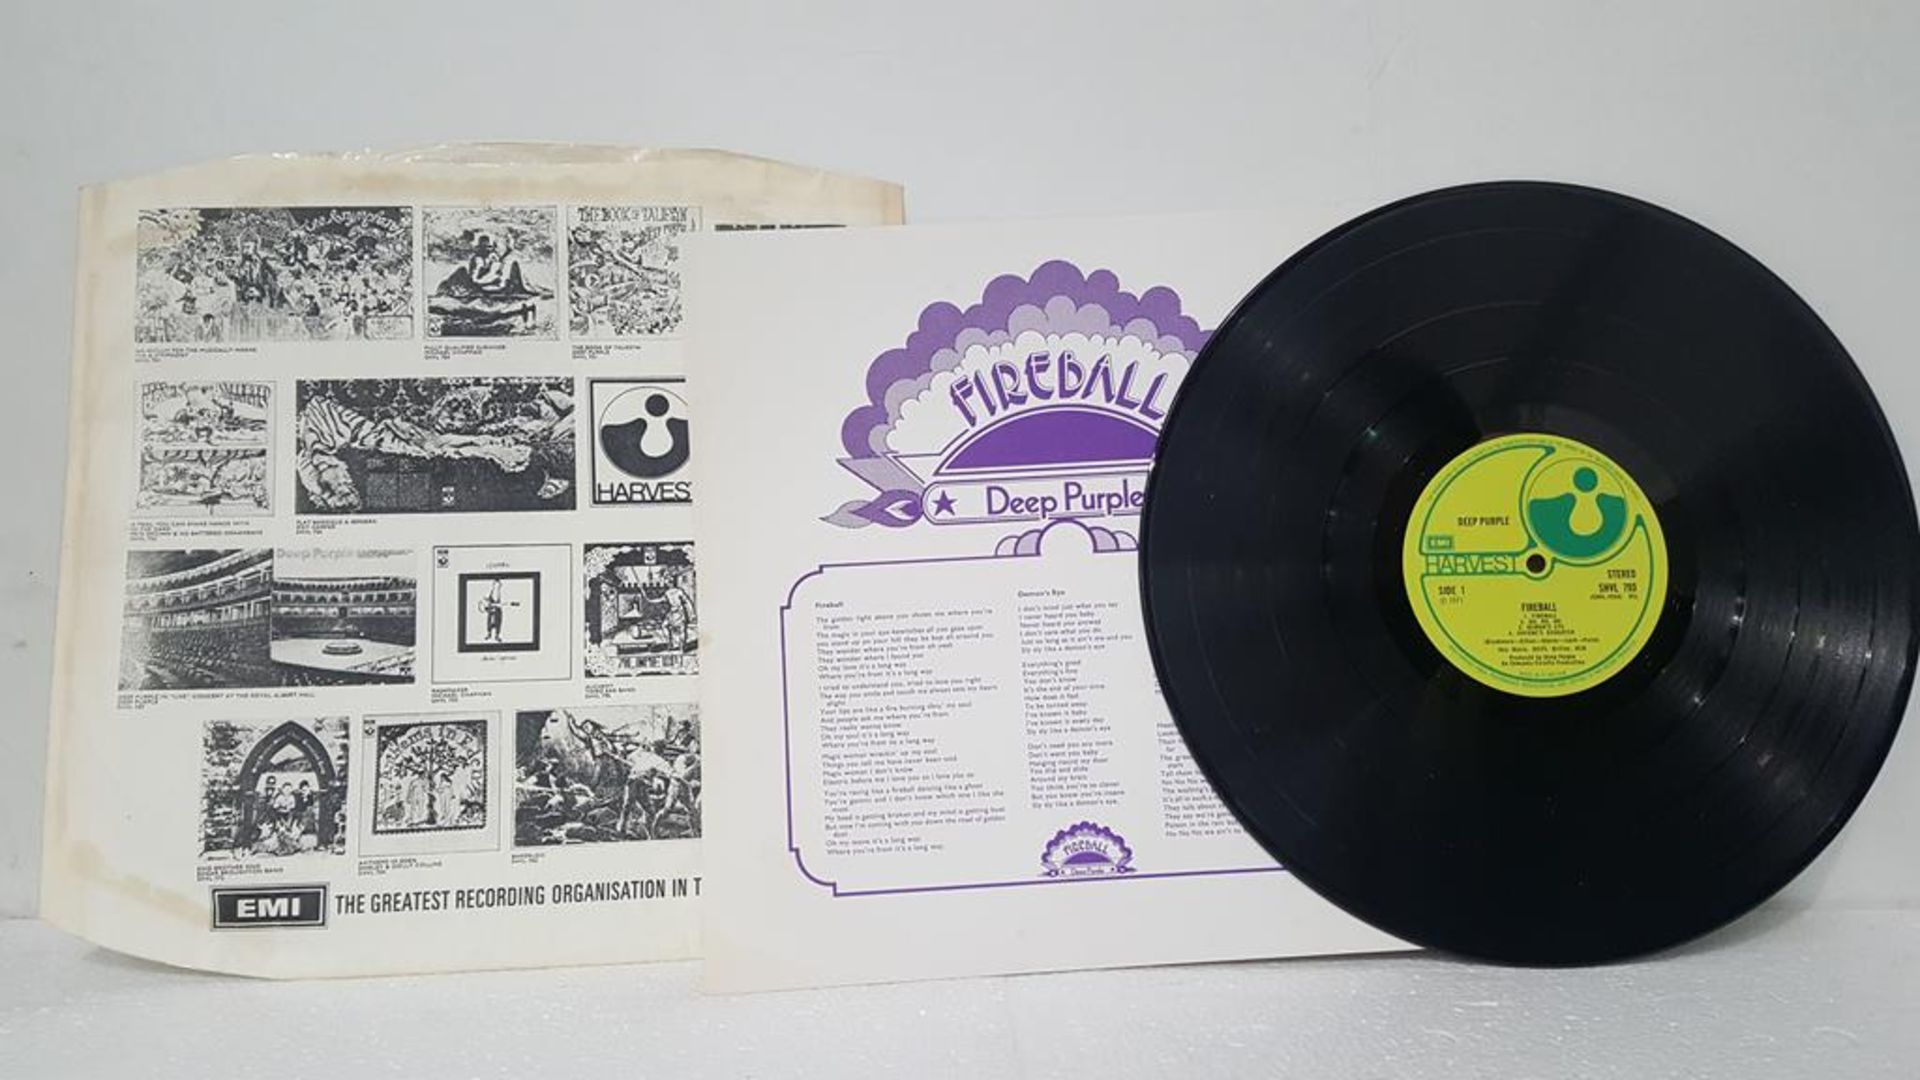 Deep Purple 'Fireball' LP - Image 4 of 5